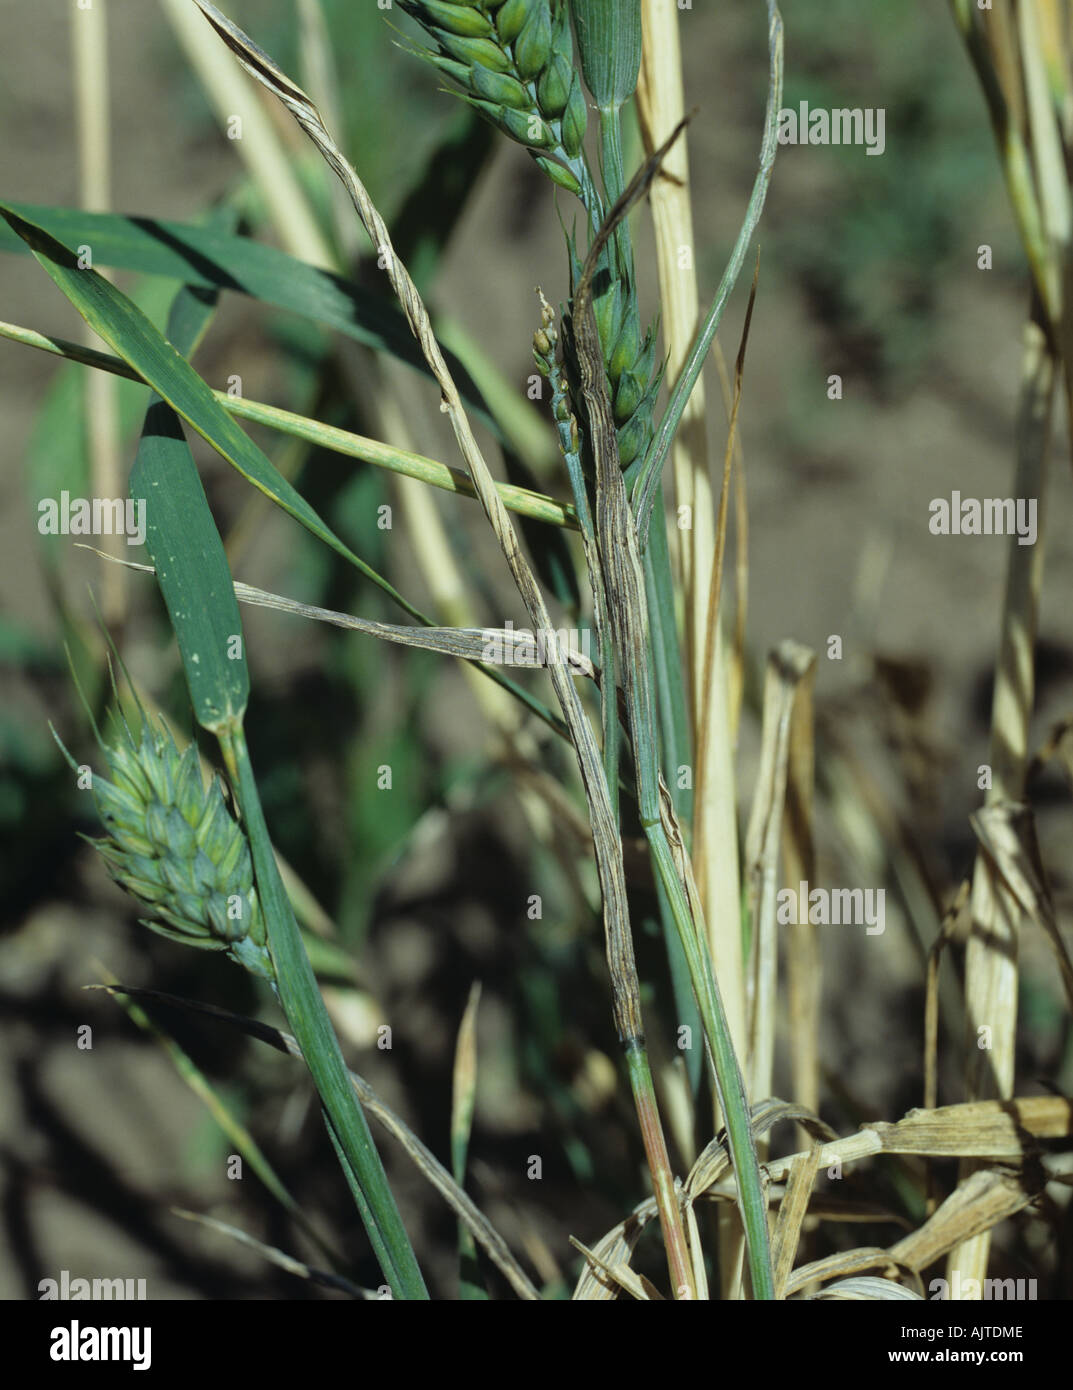 Flag smut Urocystis agropyri on flagleaf stems of senescing bearded wheat crop Stock Photo